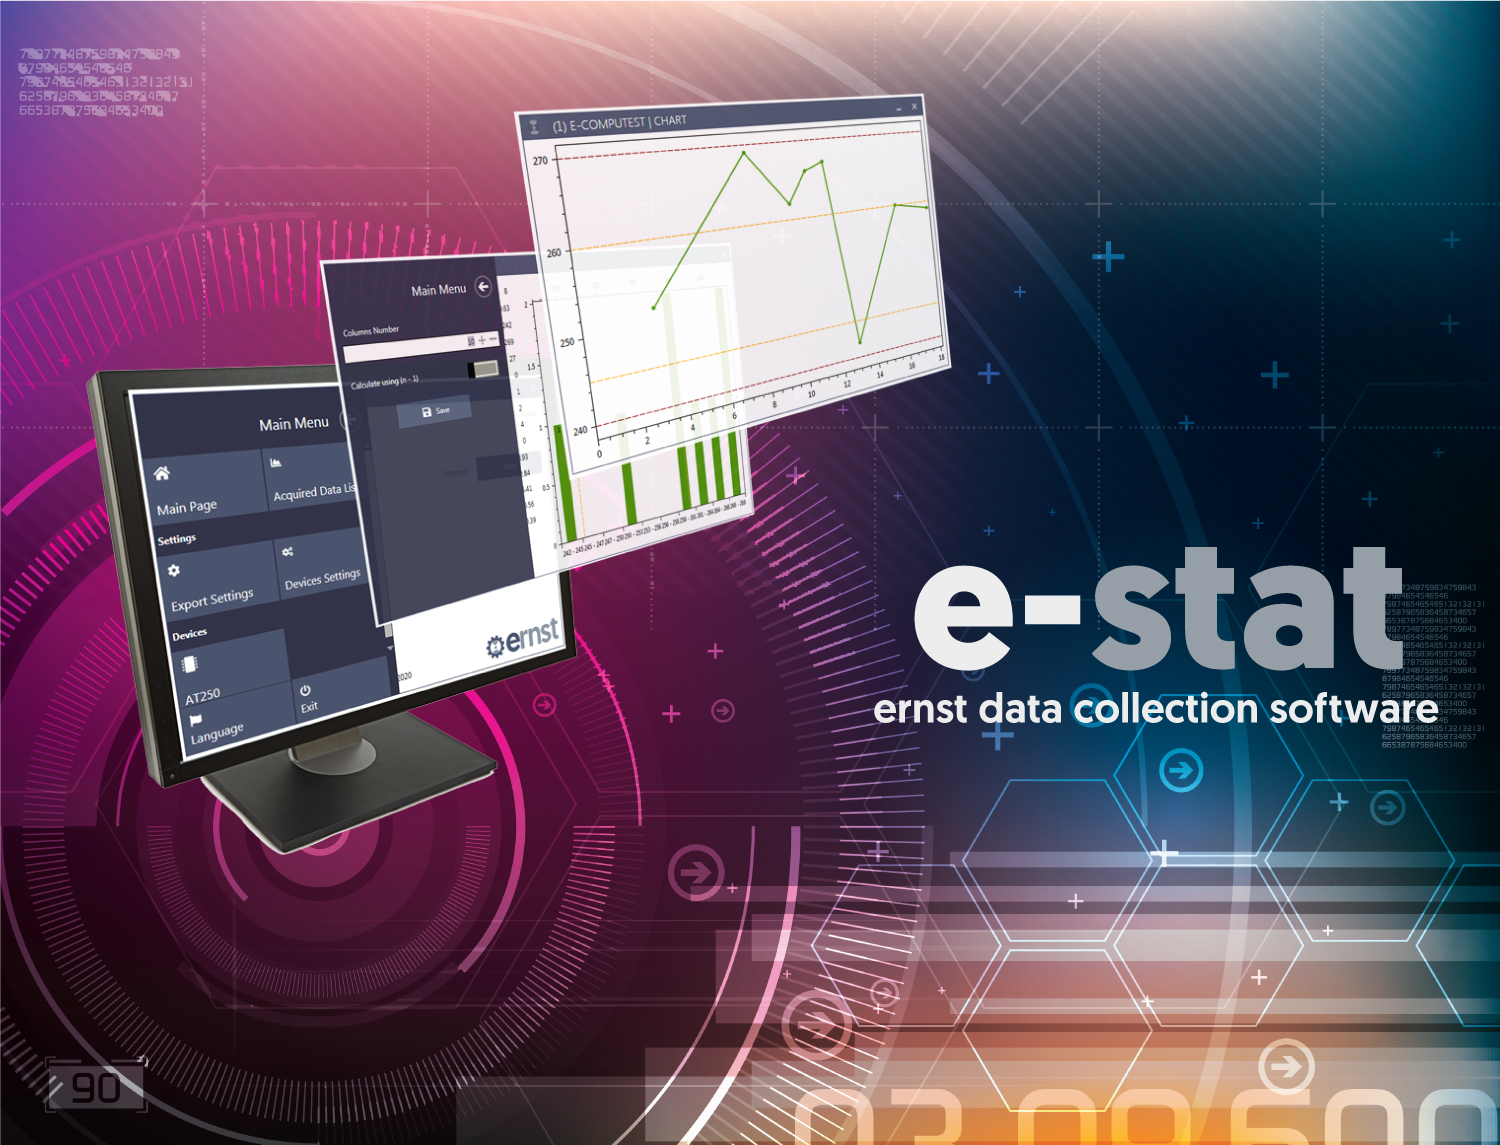 e-stat software for Ernst hardness testers